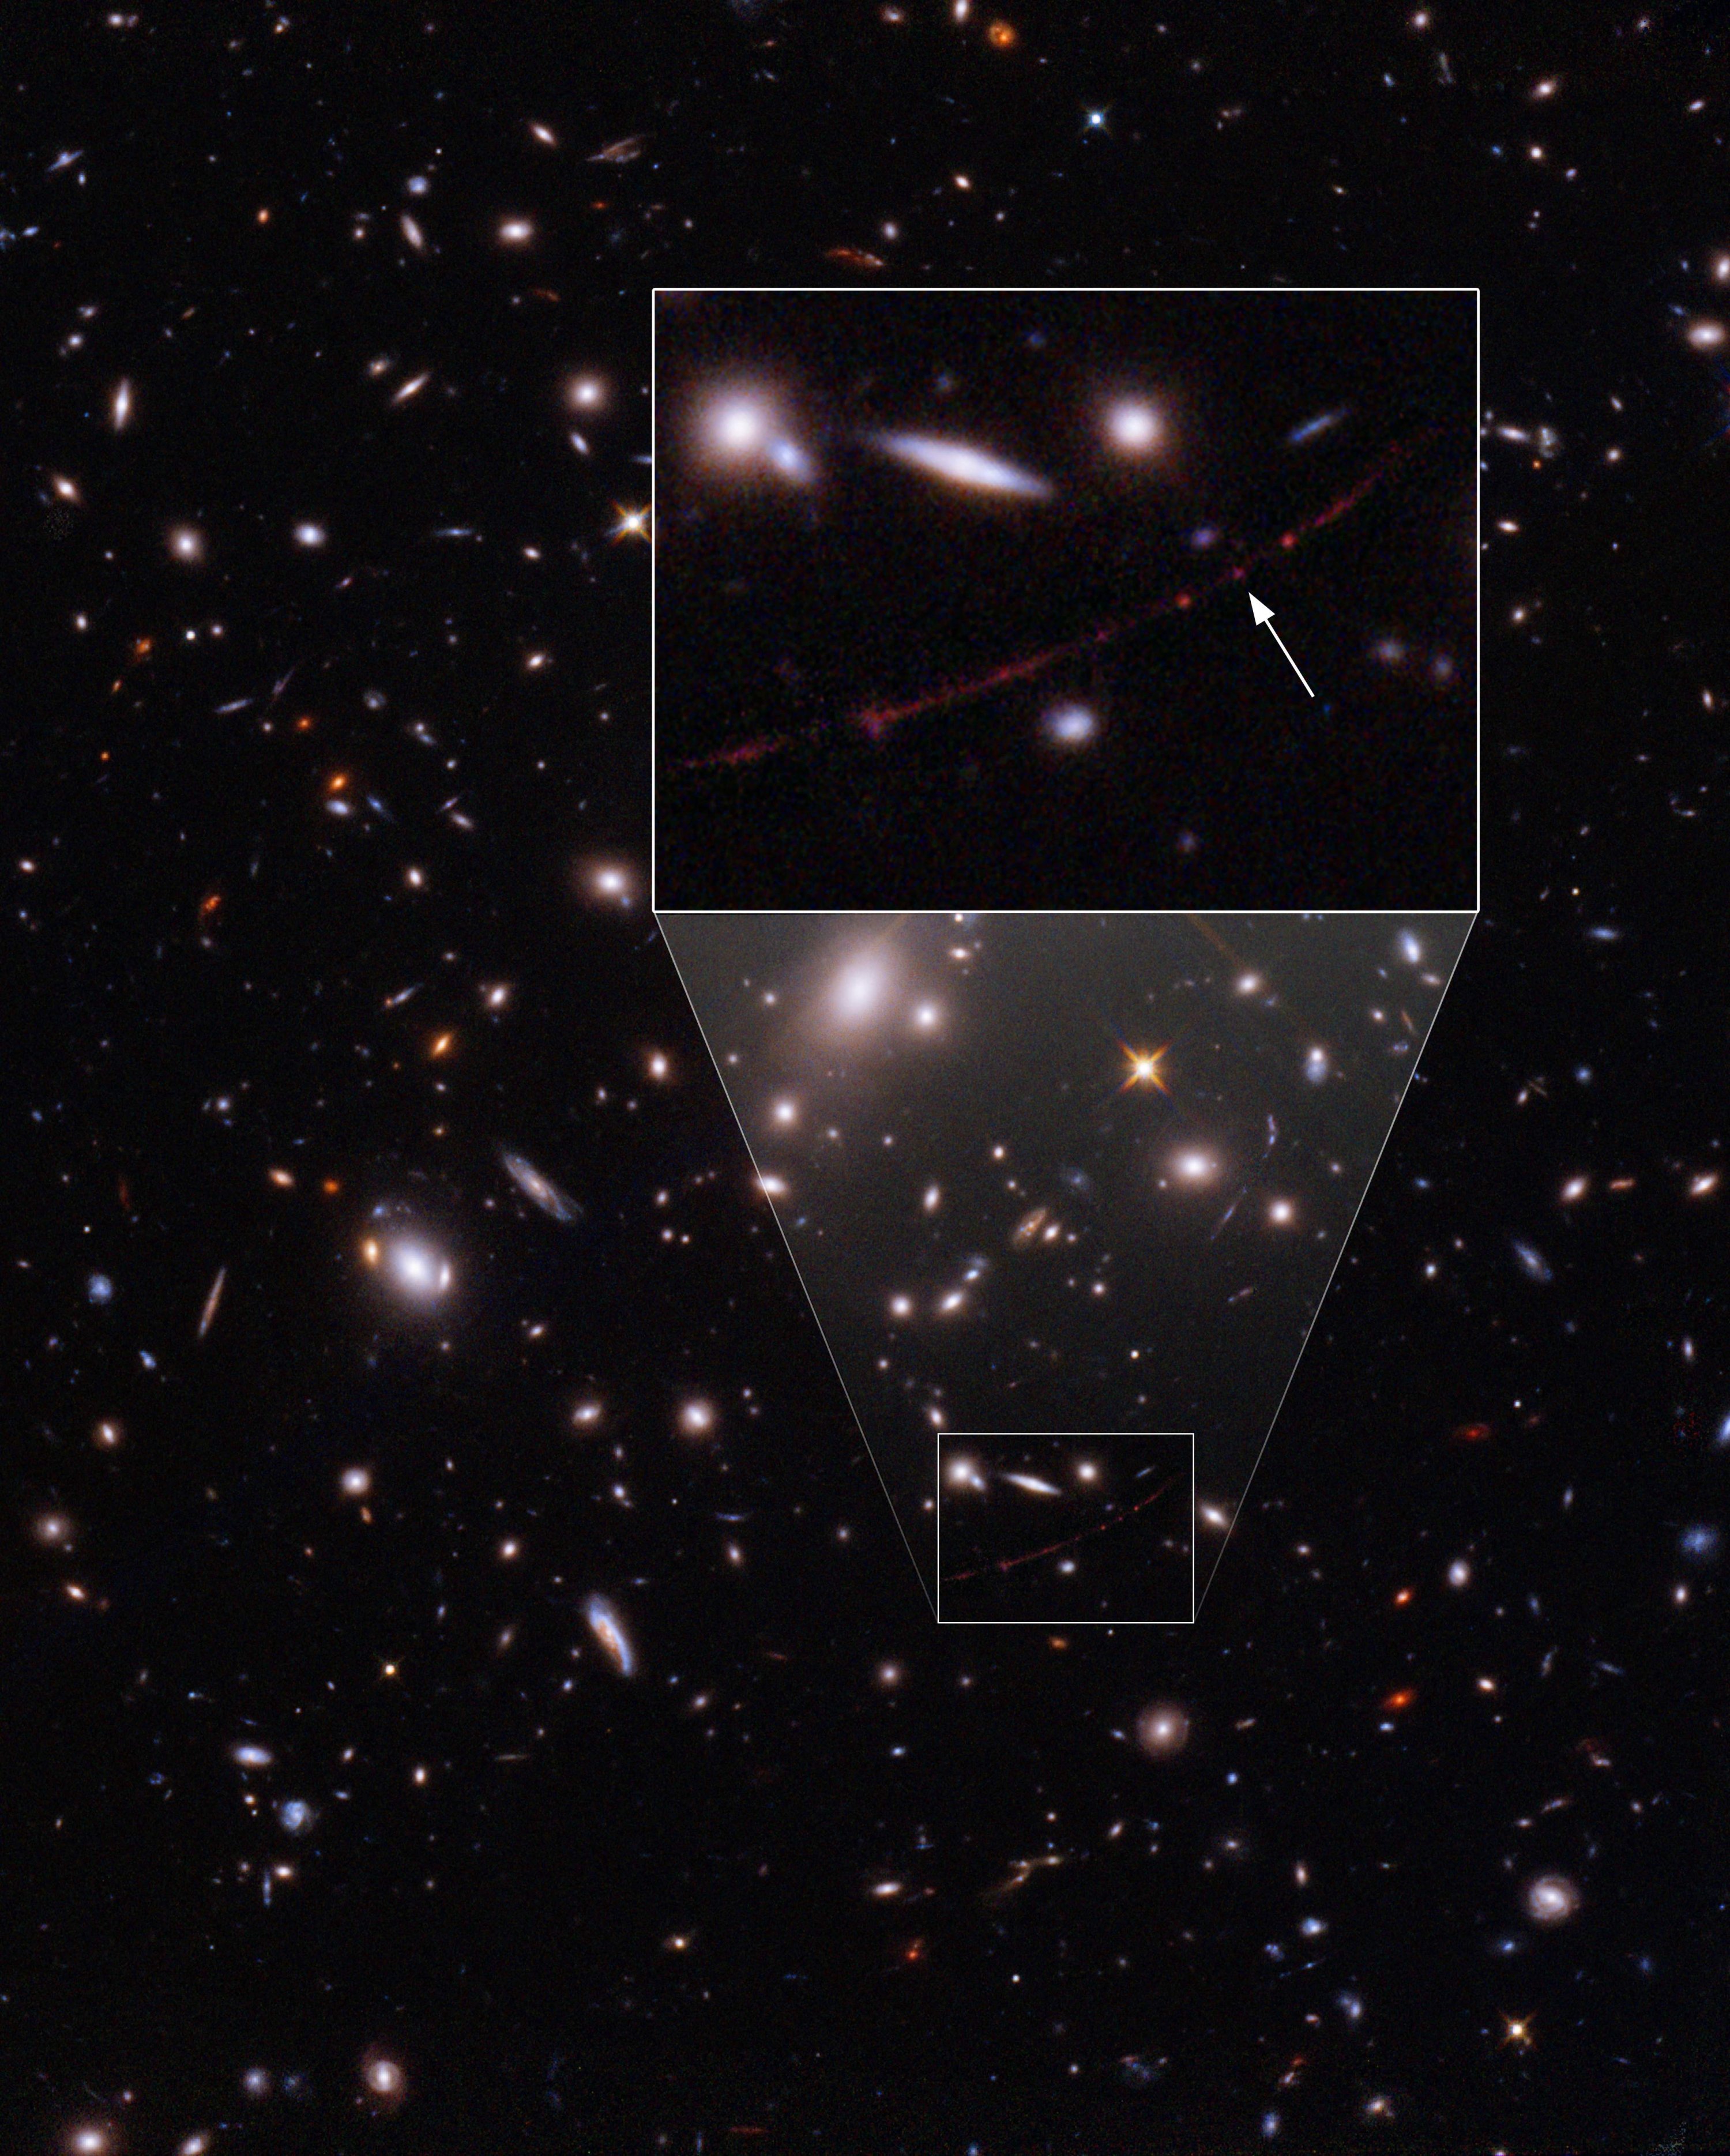 Gambar ini diperoleh dari Badan Antariksa Eropa pada 30 Maret 2022, menunjukkan bintang berjuluk Earendel (panah) yang ditangkap oleh Teleskop Luar Angkasa Hubble NASA/ESA, membuat rekor baru dengan mendeteksi cahaya bintang yang ada dalam miliaran tahun pertama. setelah Big Bang, bintang individu paling jauh yang pernah terlihat.  (NASA, ESA, B. Welch - JHU, D. Coe - STScI, A. Pagan - STScI melalui AP)